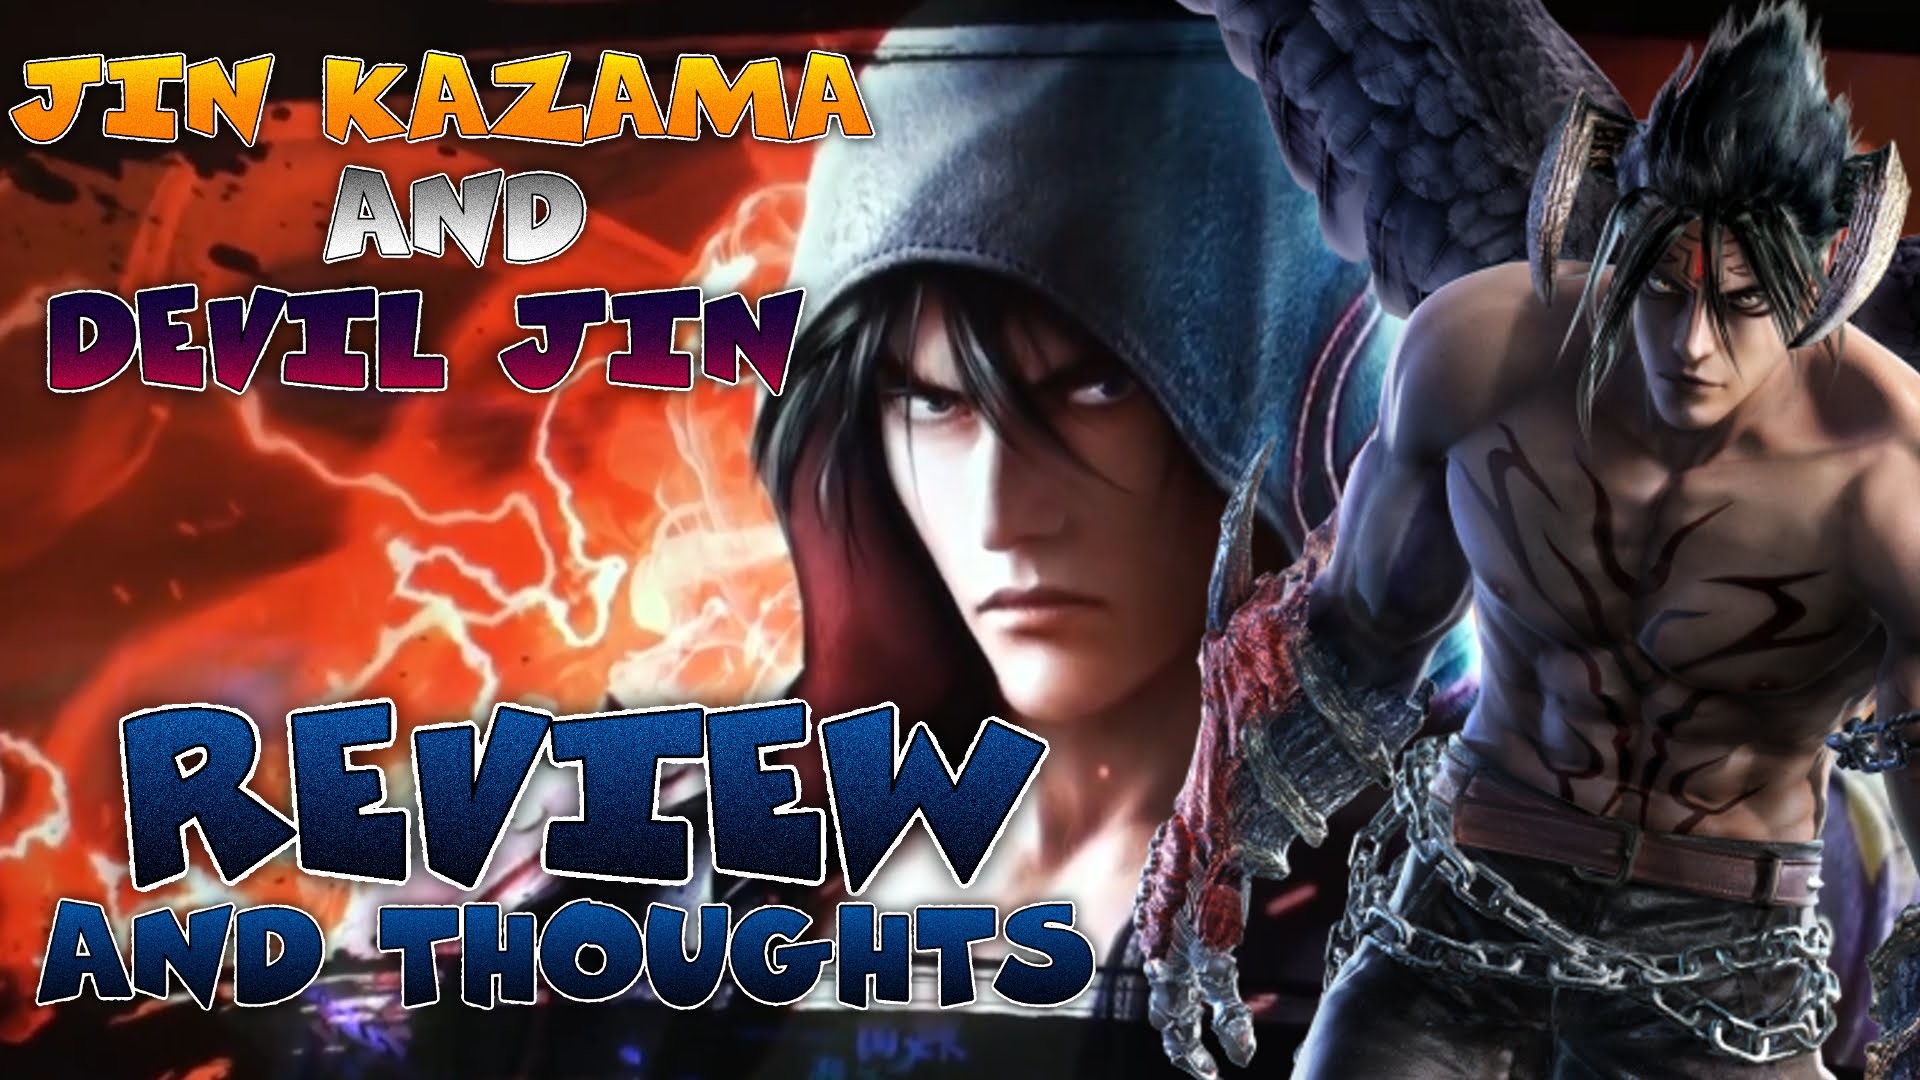 1920x1080 Tekken 7: Jin Kazama & Devil Jin Trailer REVIEW AND THOUGHTS #5 - YouTube